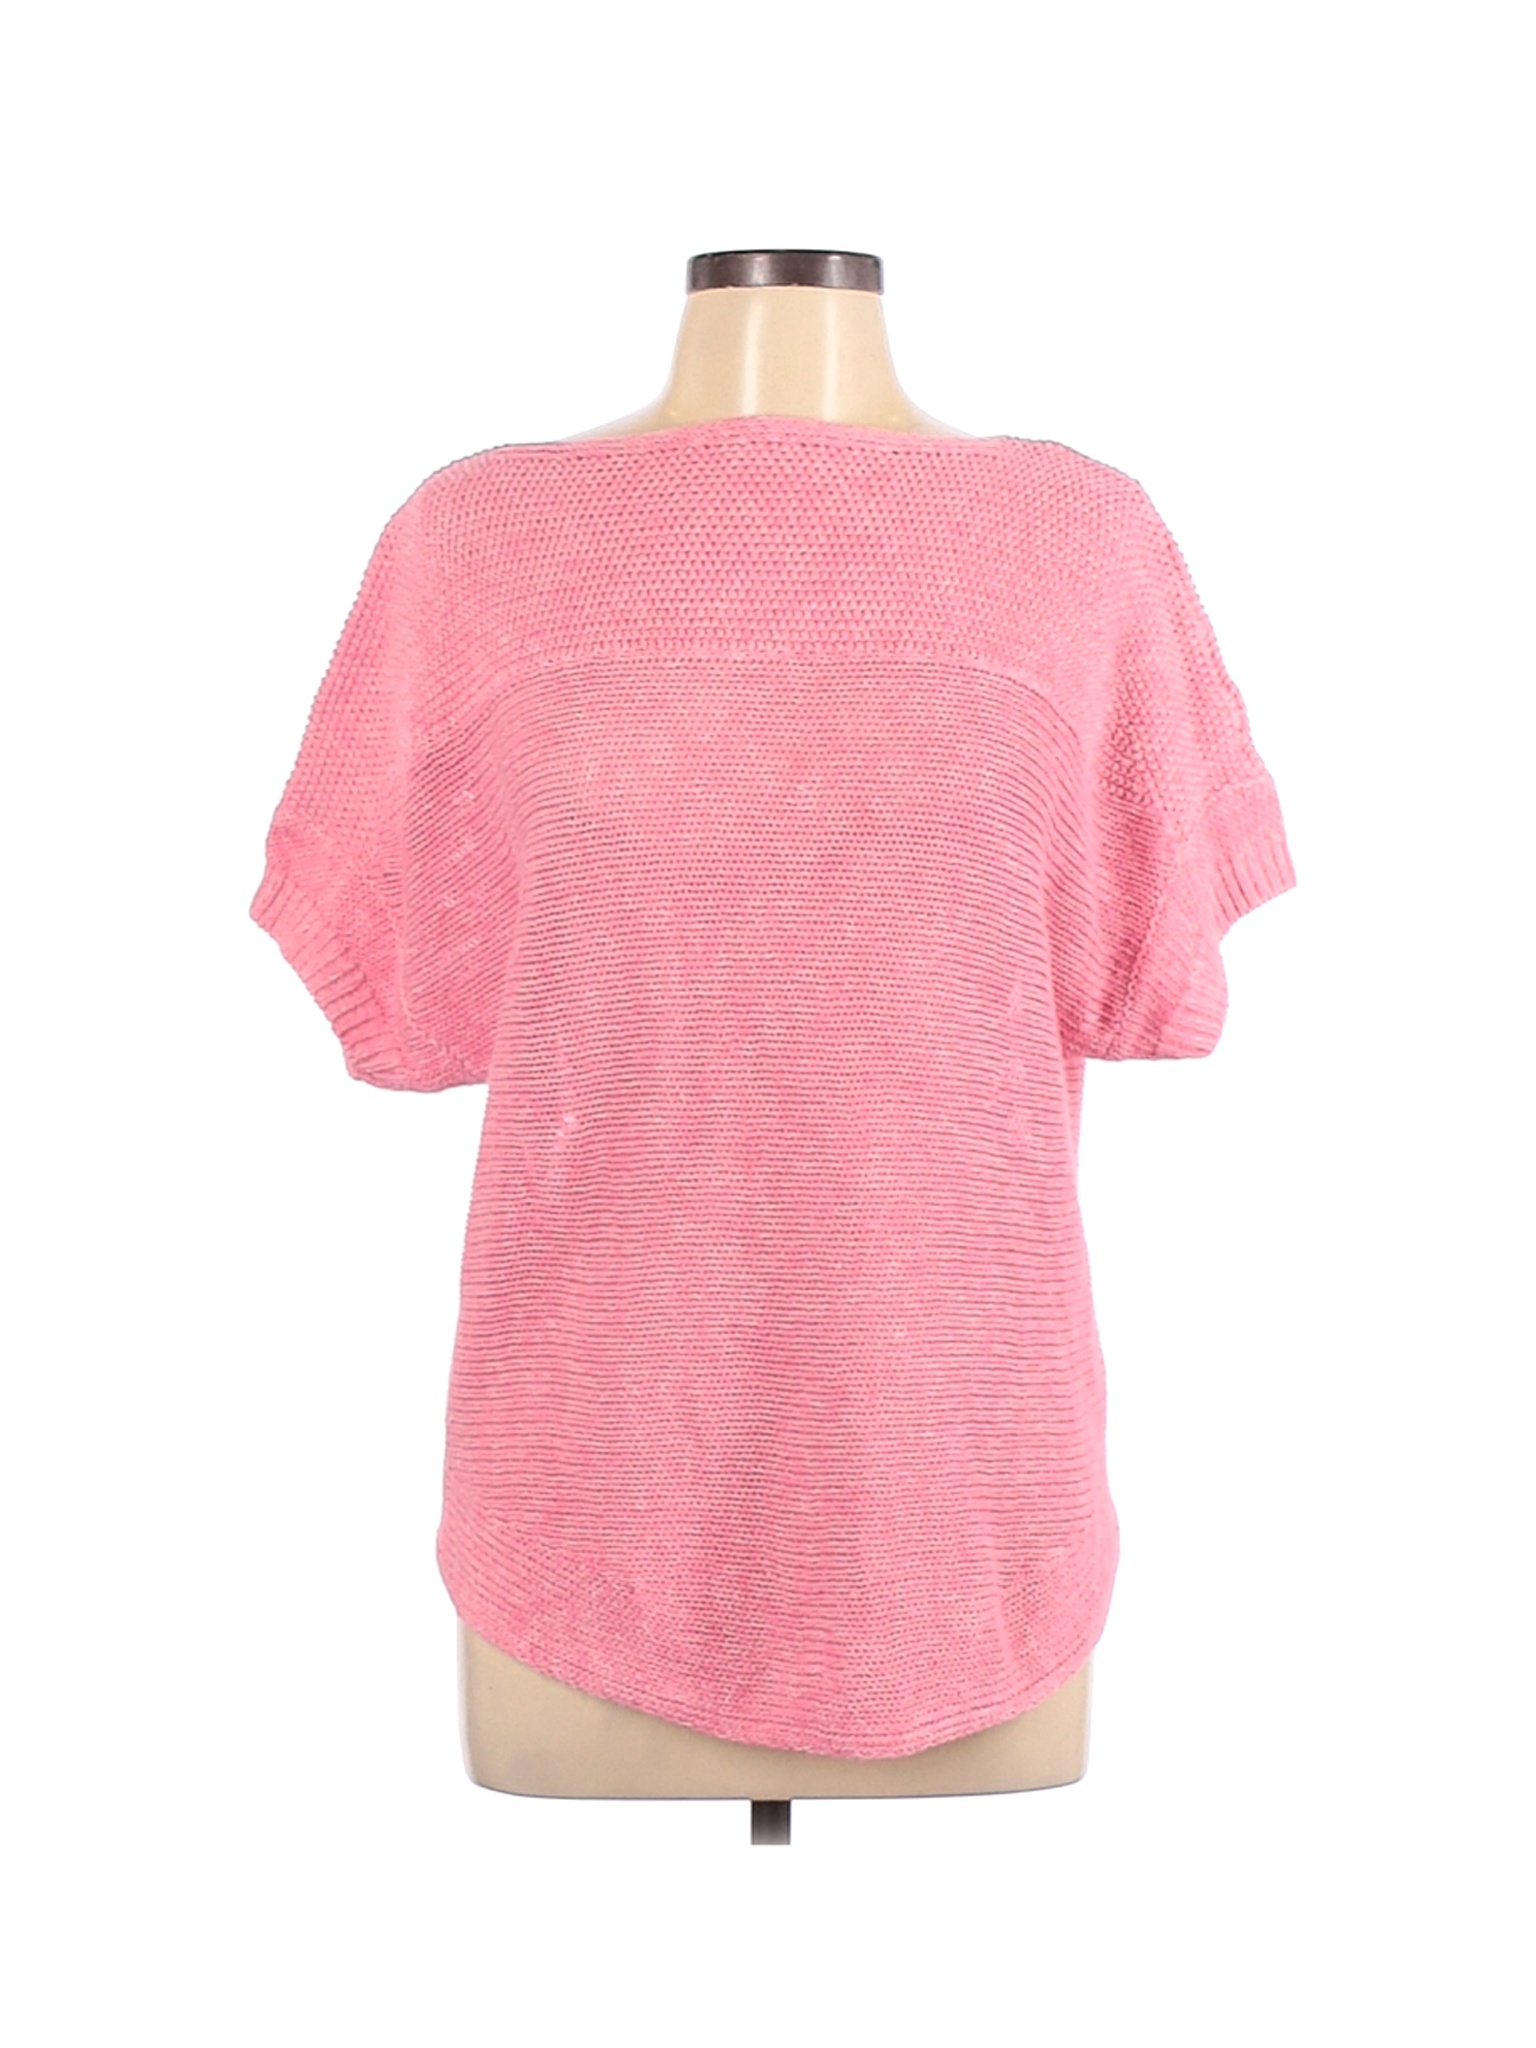 Tommy Bahama Women Pink Short Sleeve Top L | eBay